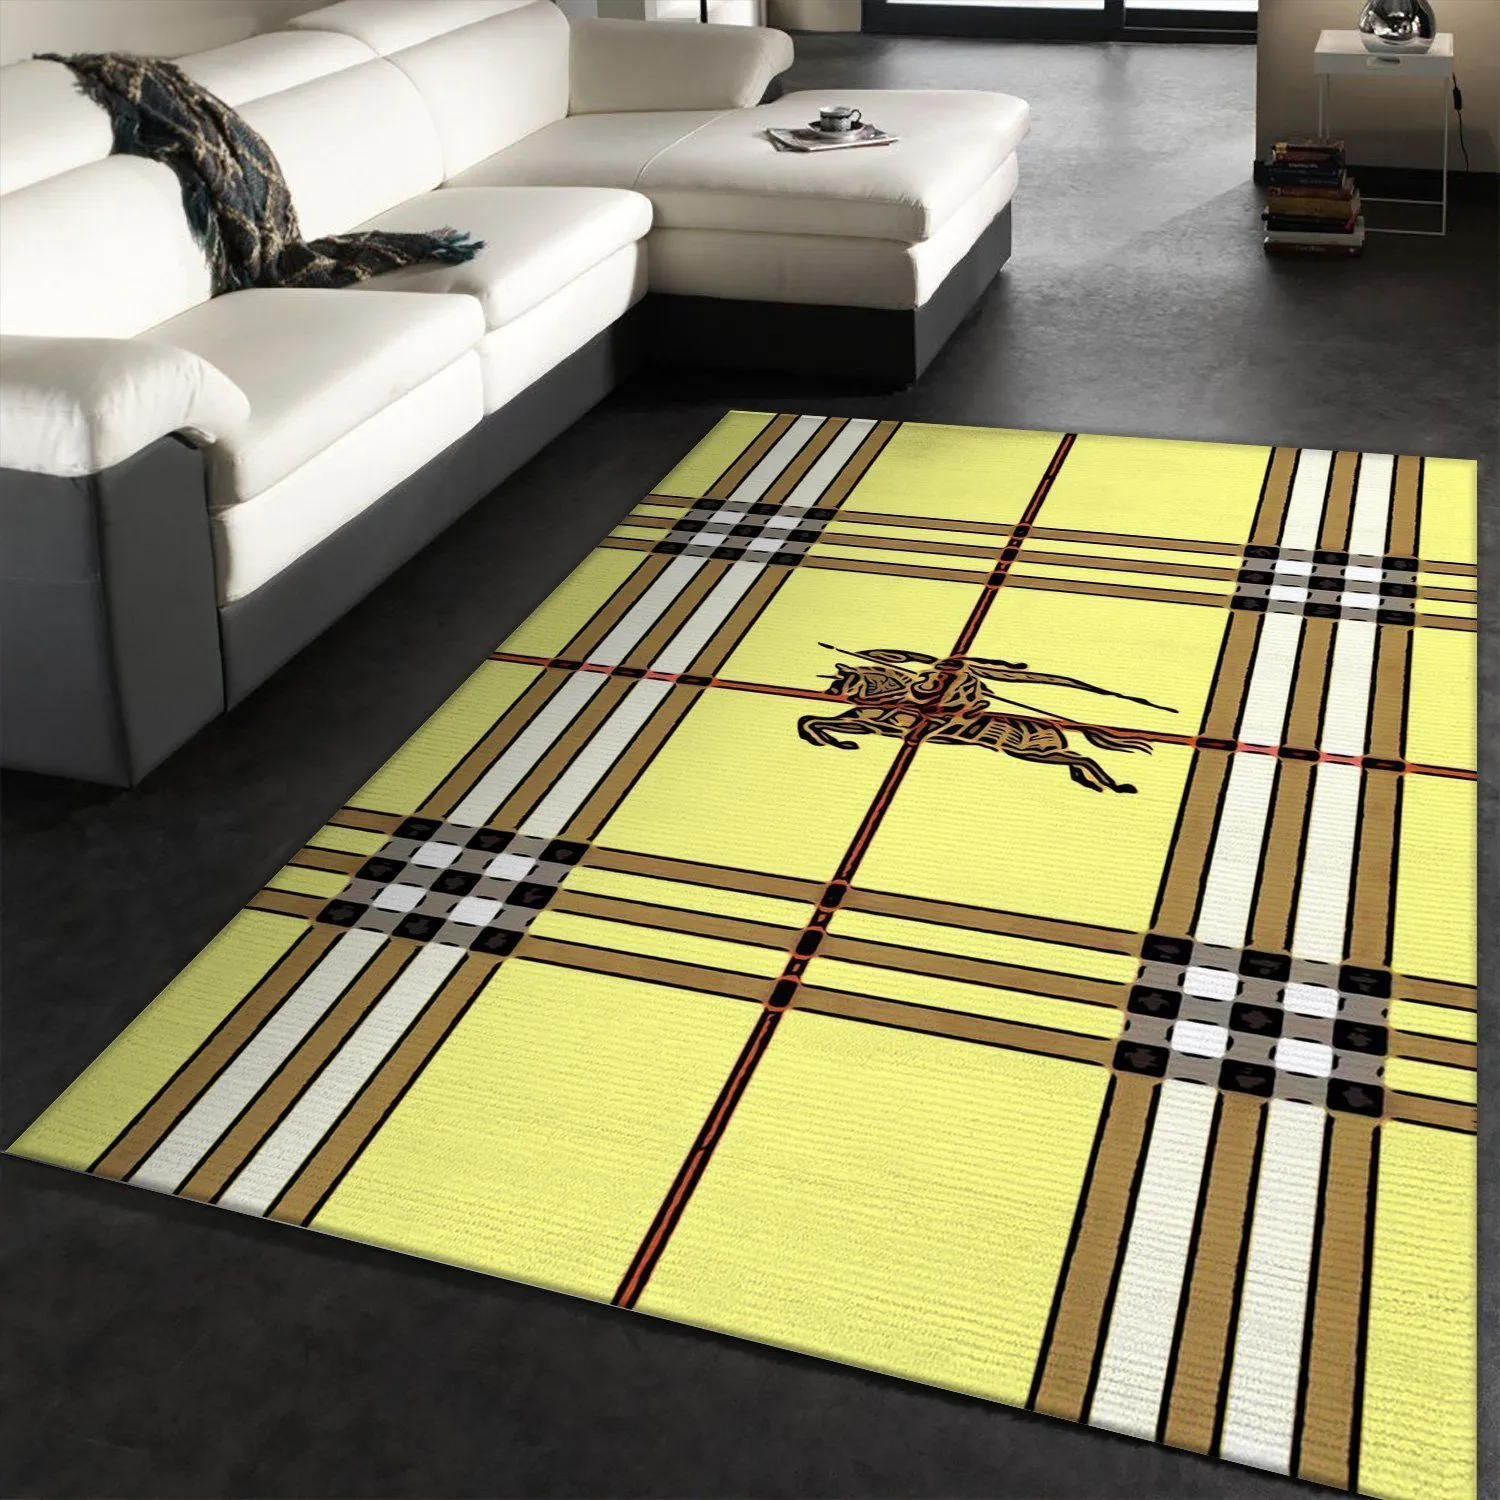 Burberry yellow Rectangle Rug Door Mat Luxury Home Decor Area Carpet Fashion Brand